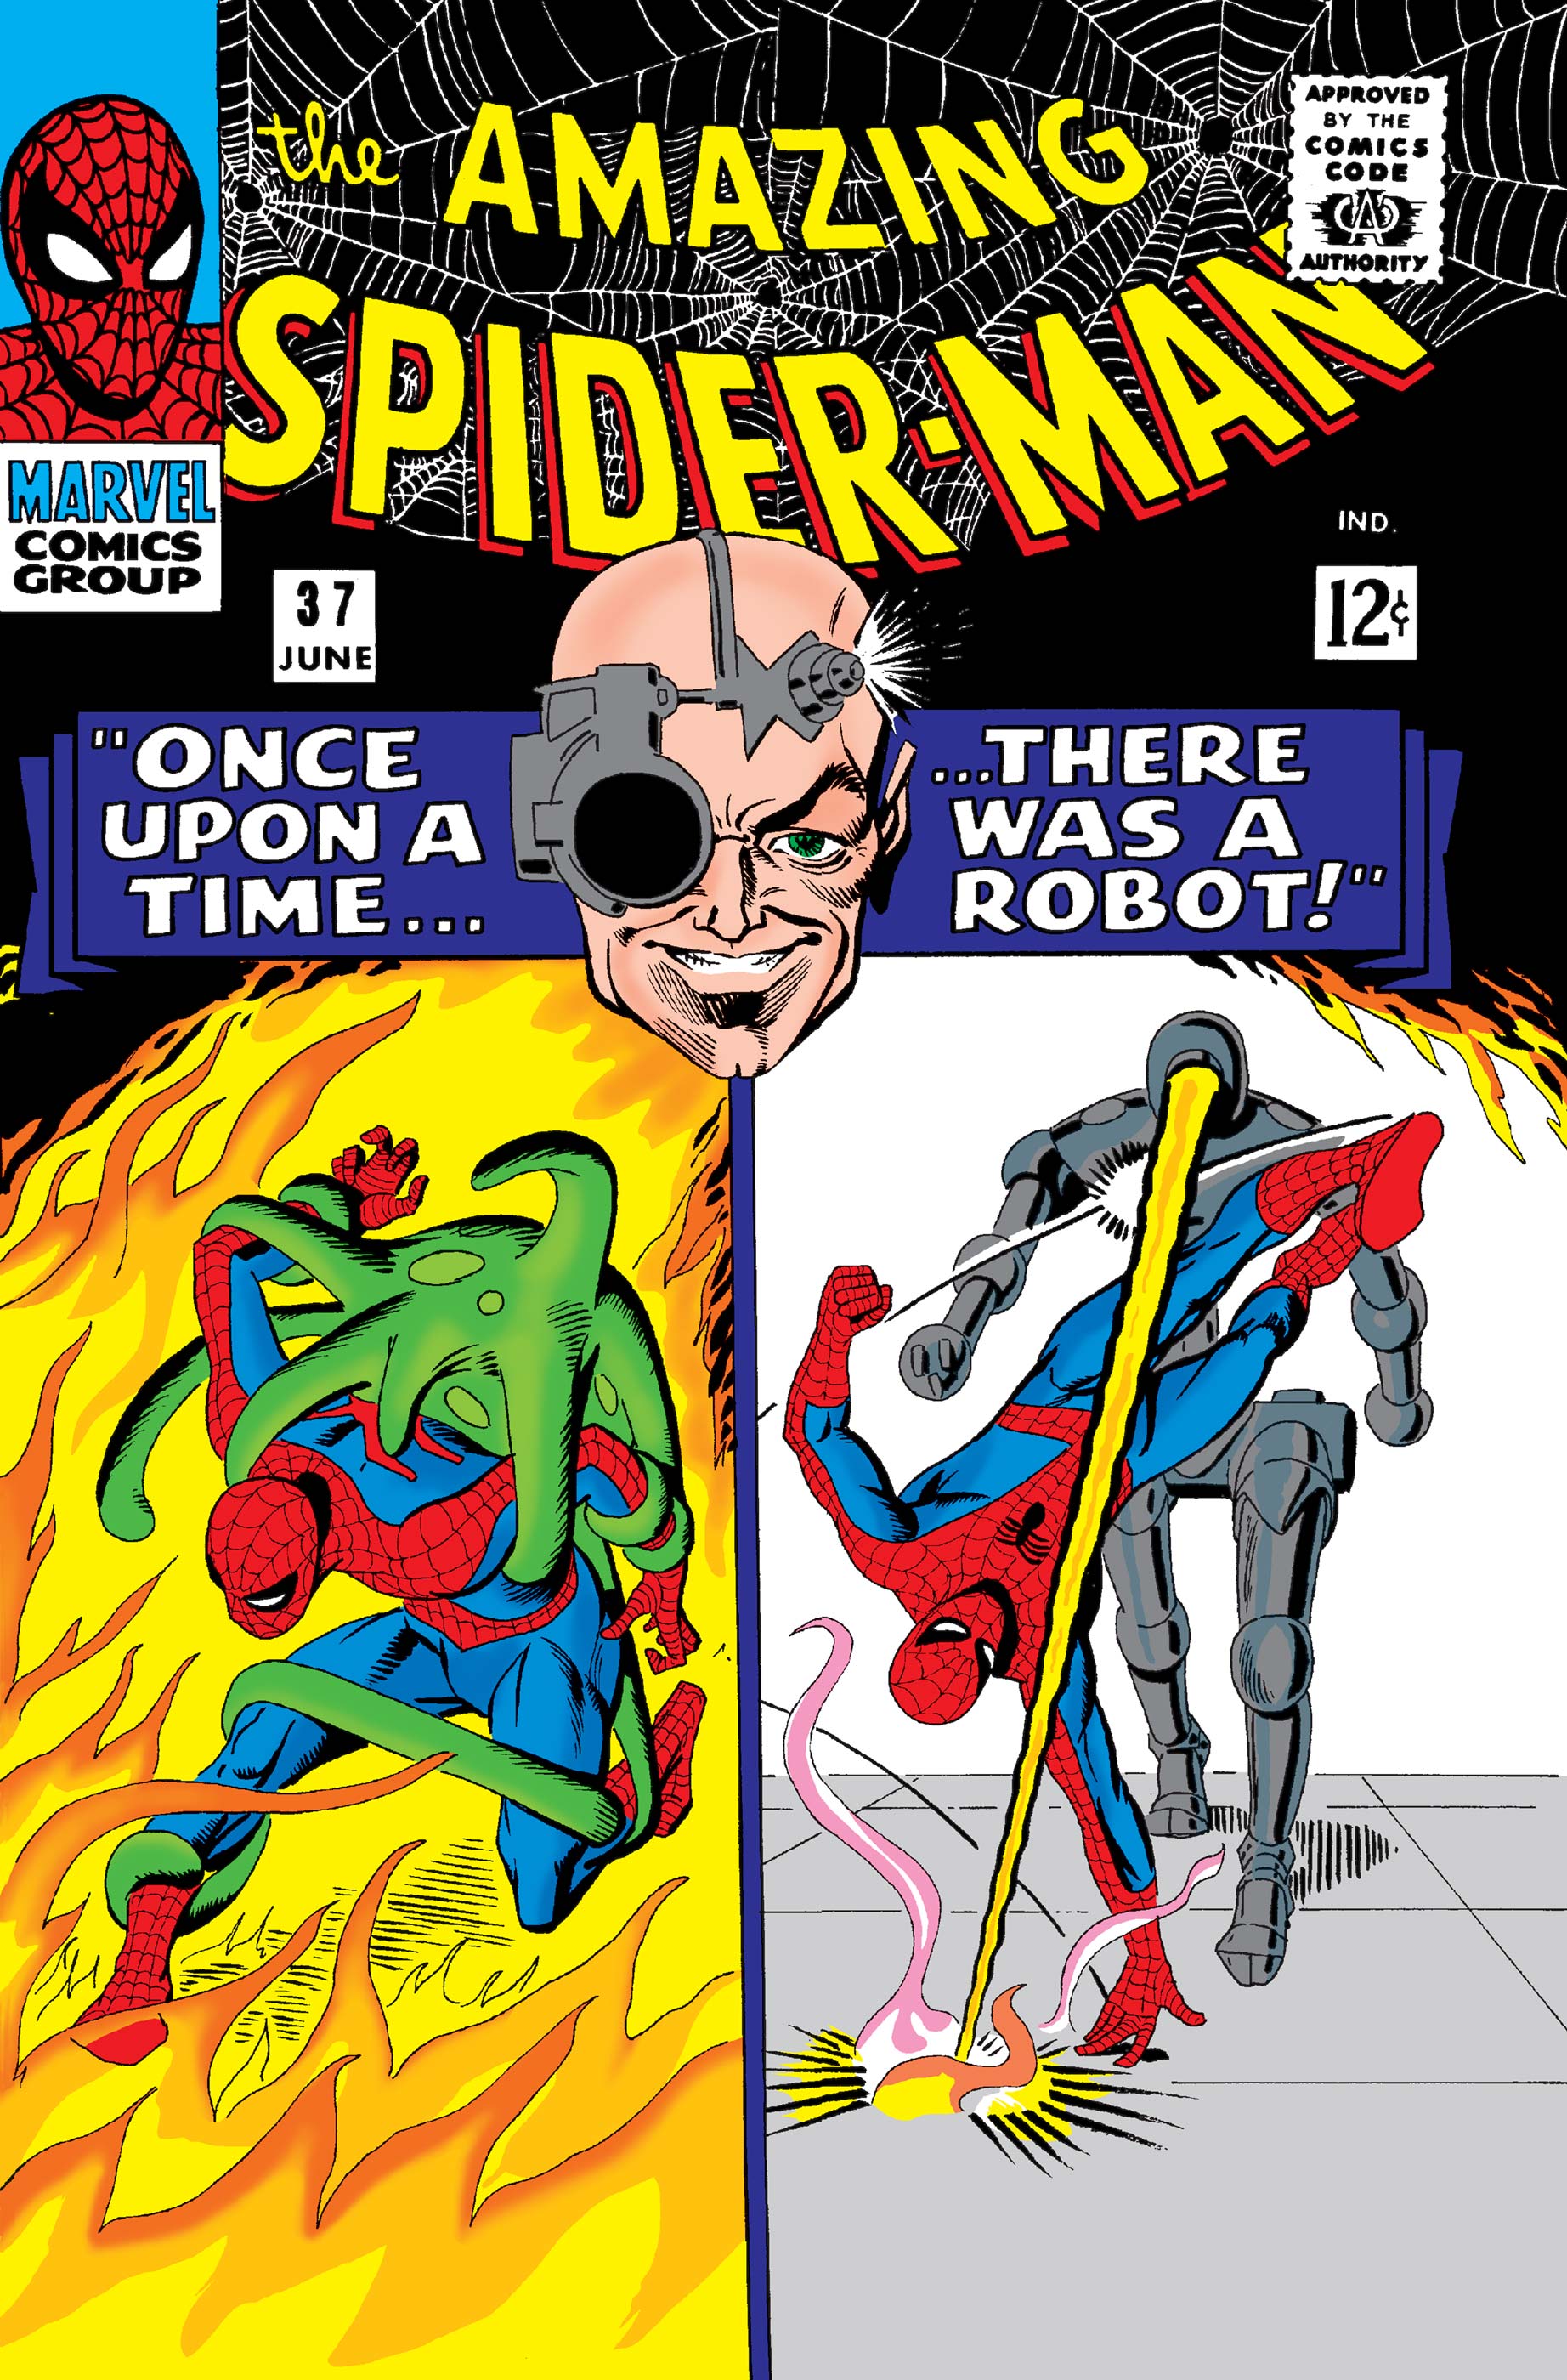 The Amazing Spider-Man (1963) #37